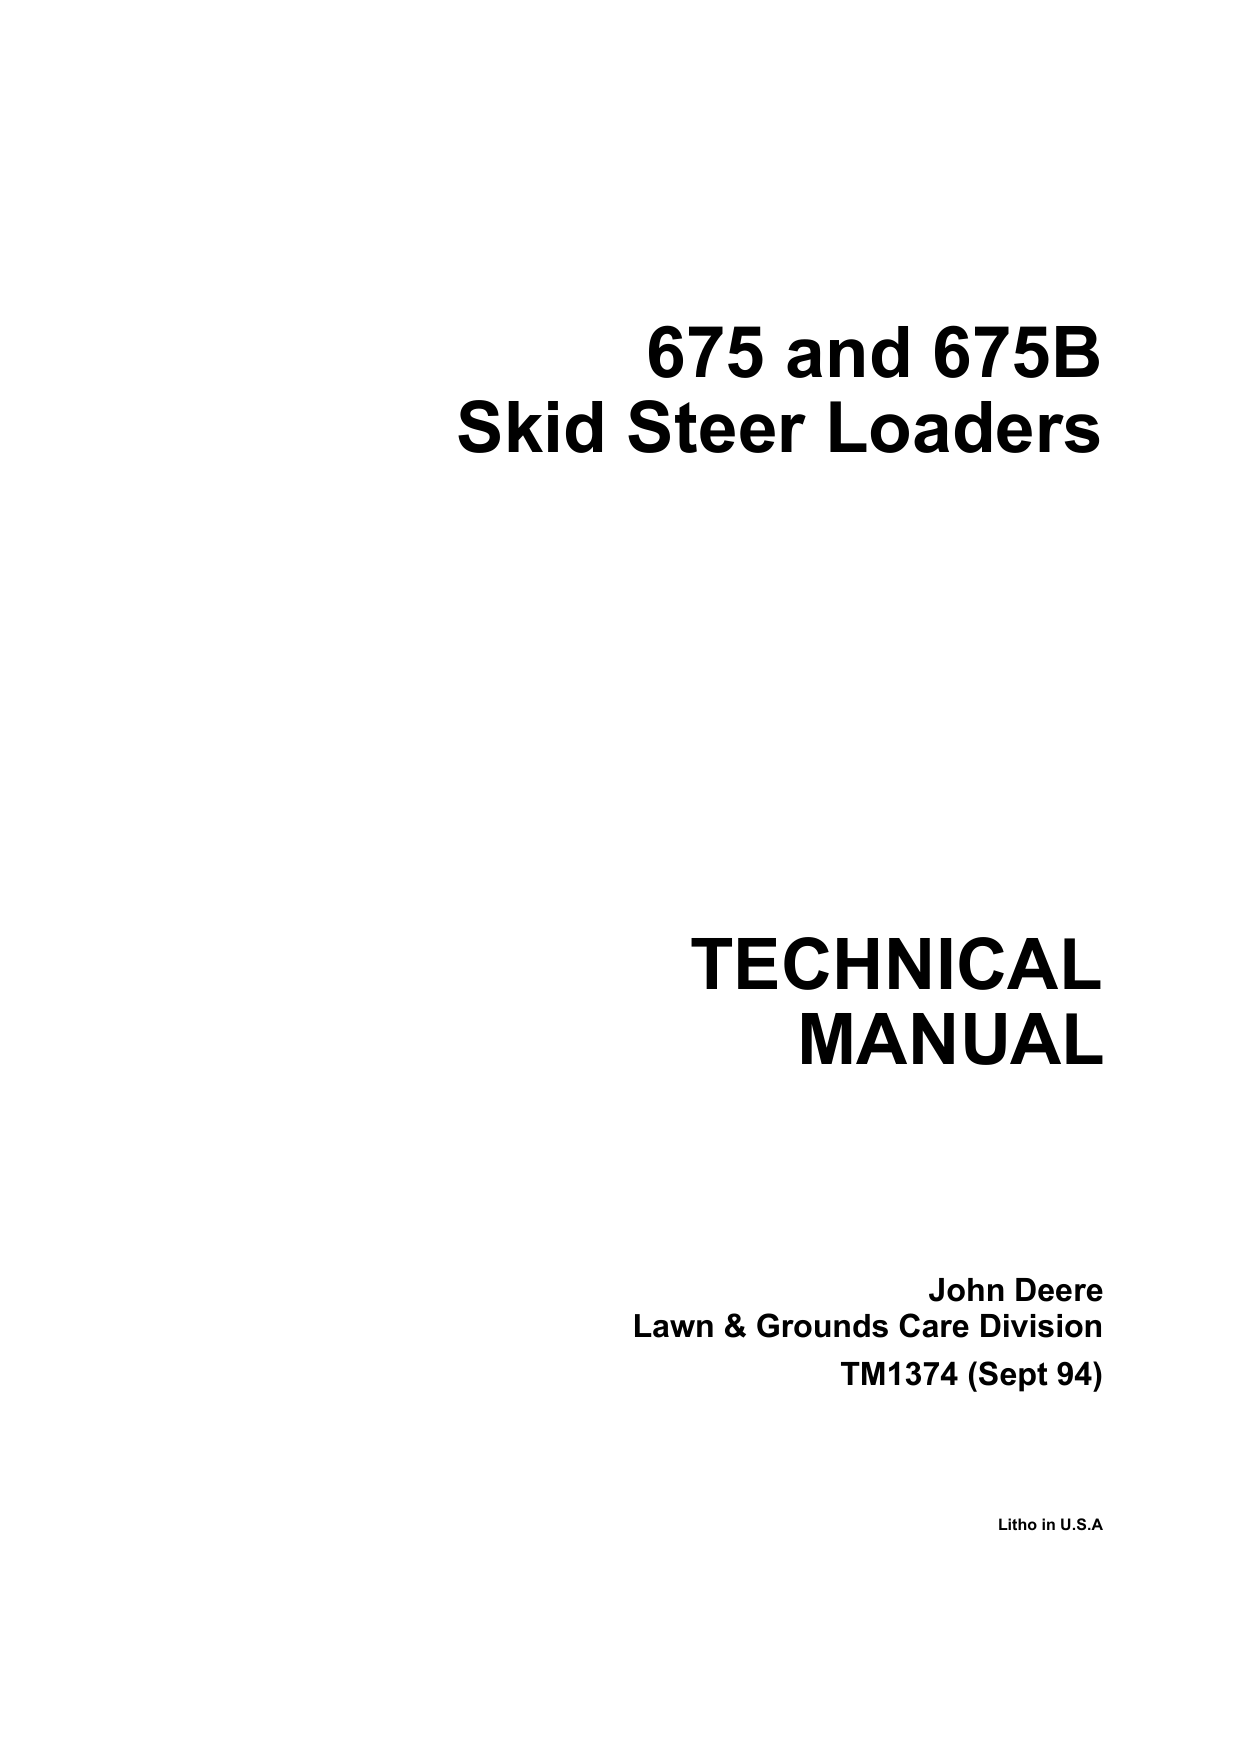 John Deere 675, 675B skid steer loader technical manual Preview image 6